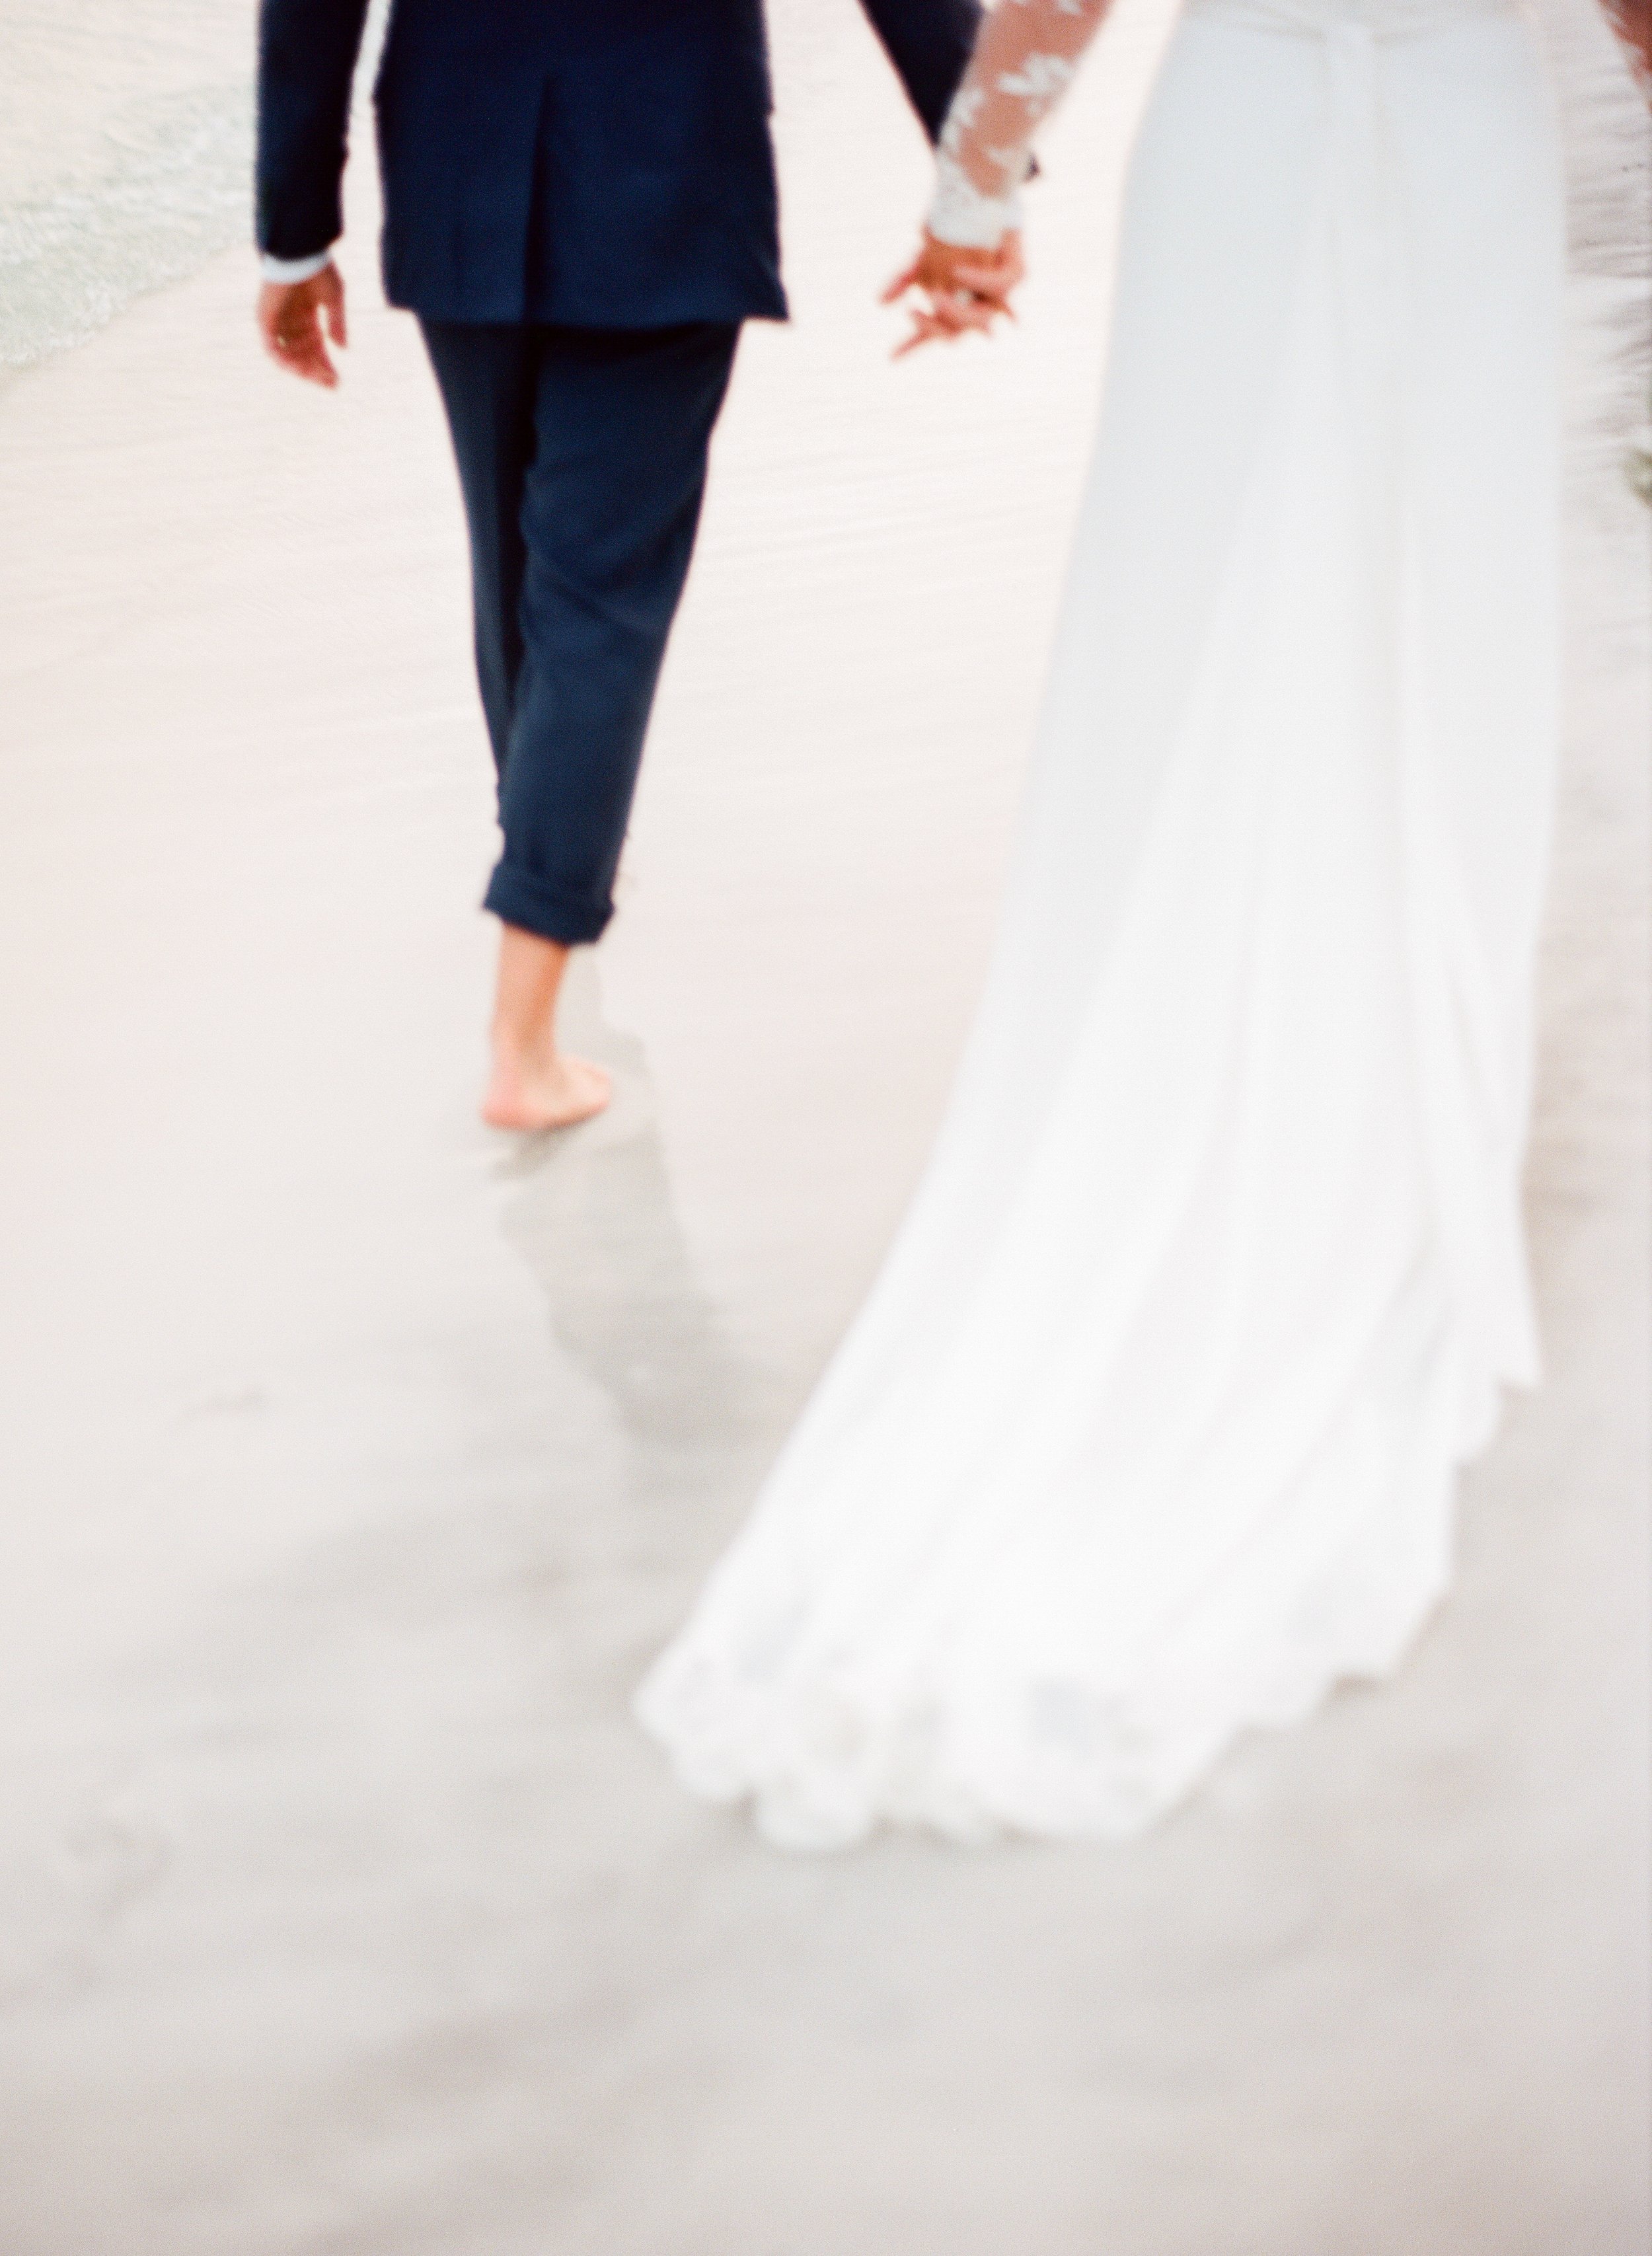 Beach destination wedding with bride and groom walking barefoot holding hands by luxury wedding photographer Amanda Watson